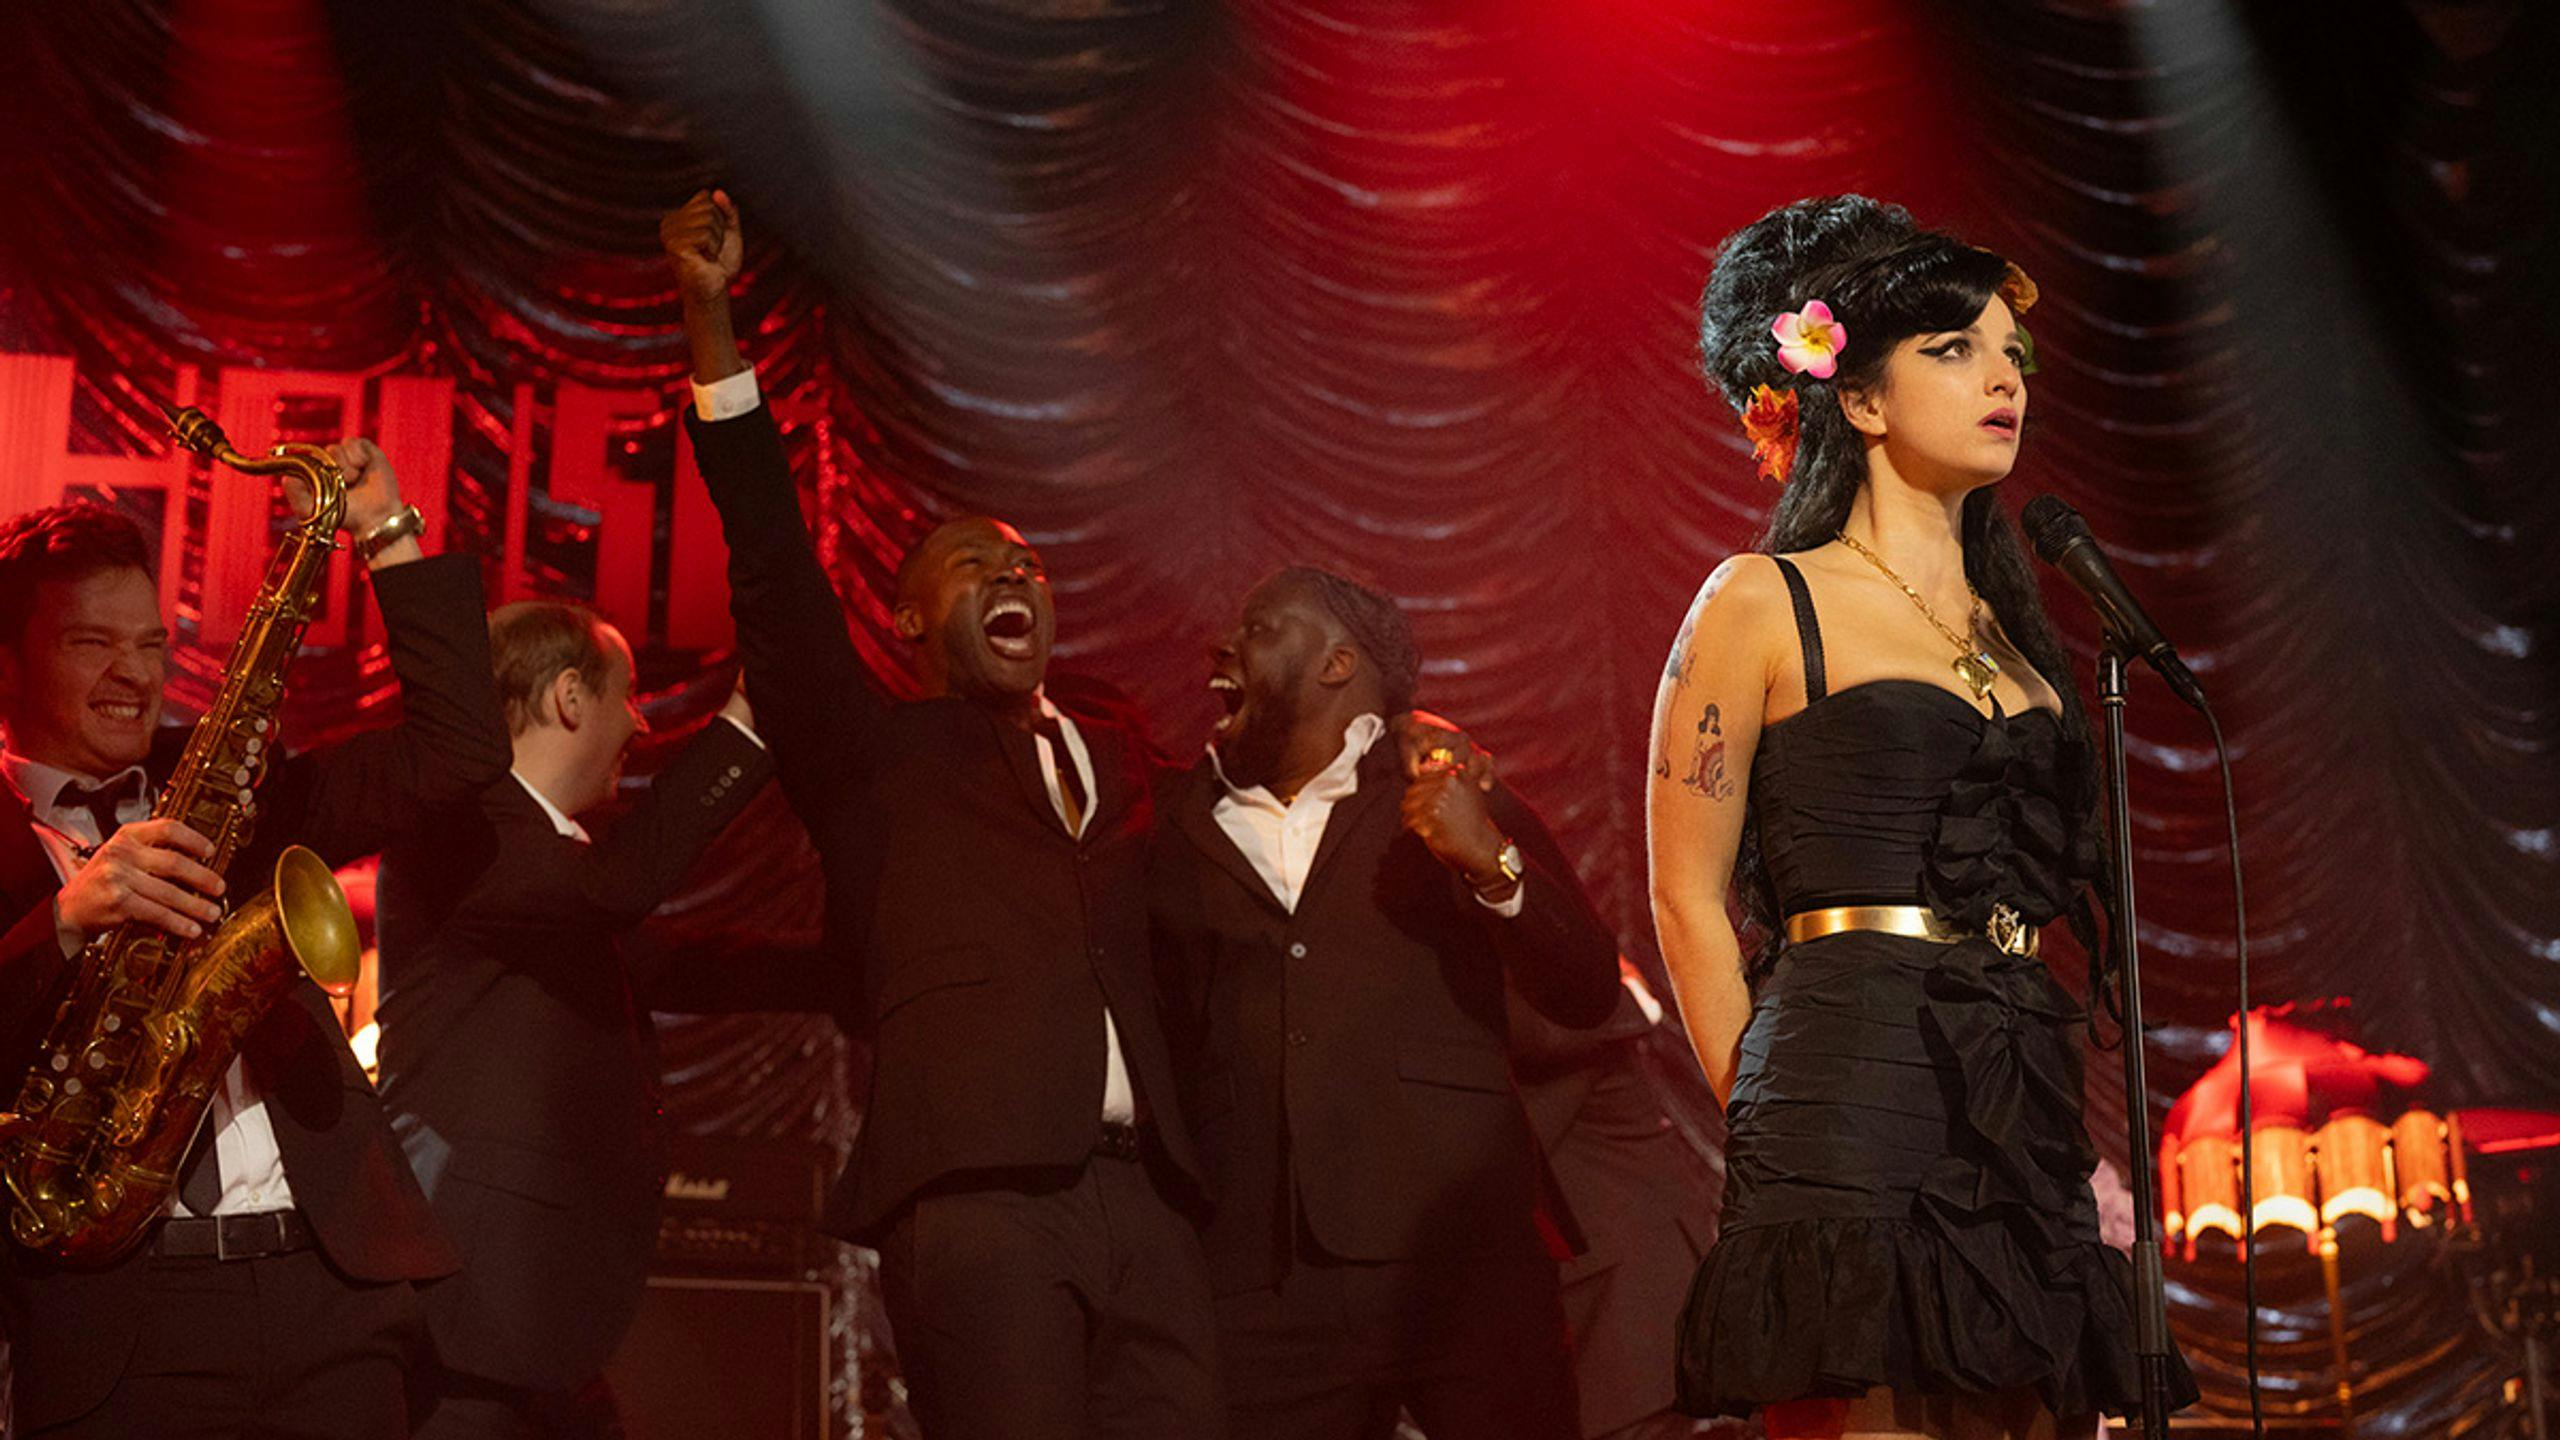 Marisa Abela caracterizada como Amy Winehouse en un fotograma promocional de 'Back to black'